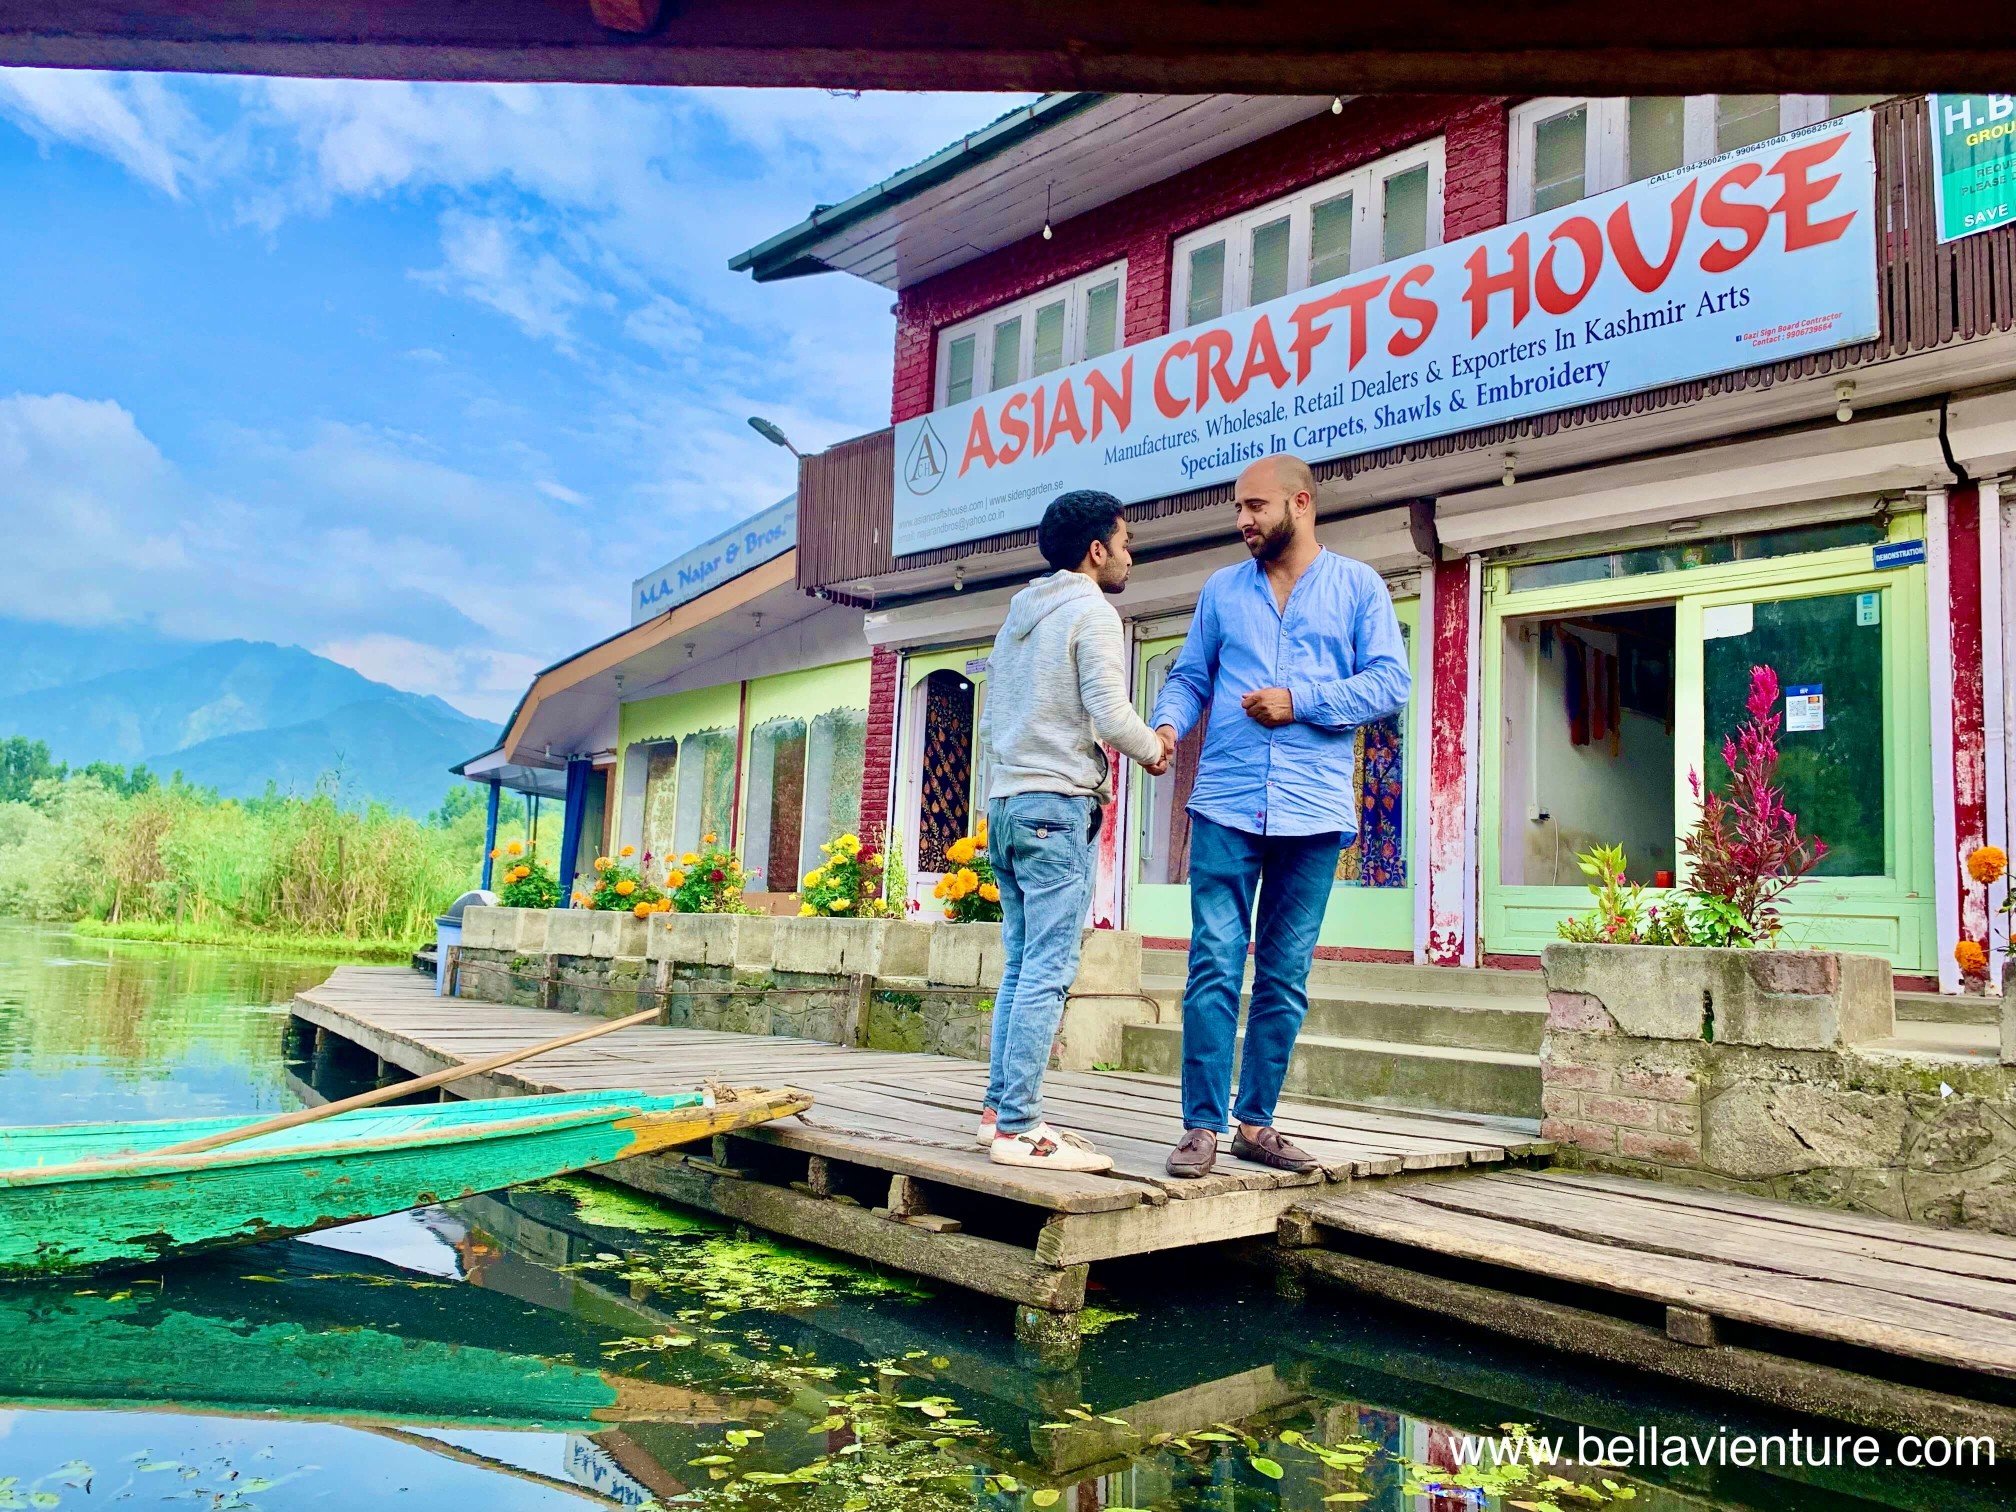 印度 India 北北印 north India 喀什米爾 Kashmir 斯里納加 Srinagar Dal lake 湖景 lakeside craft house